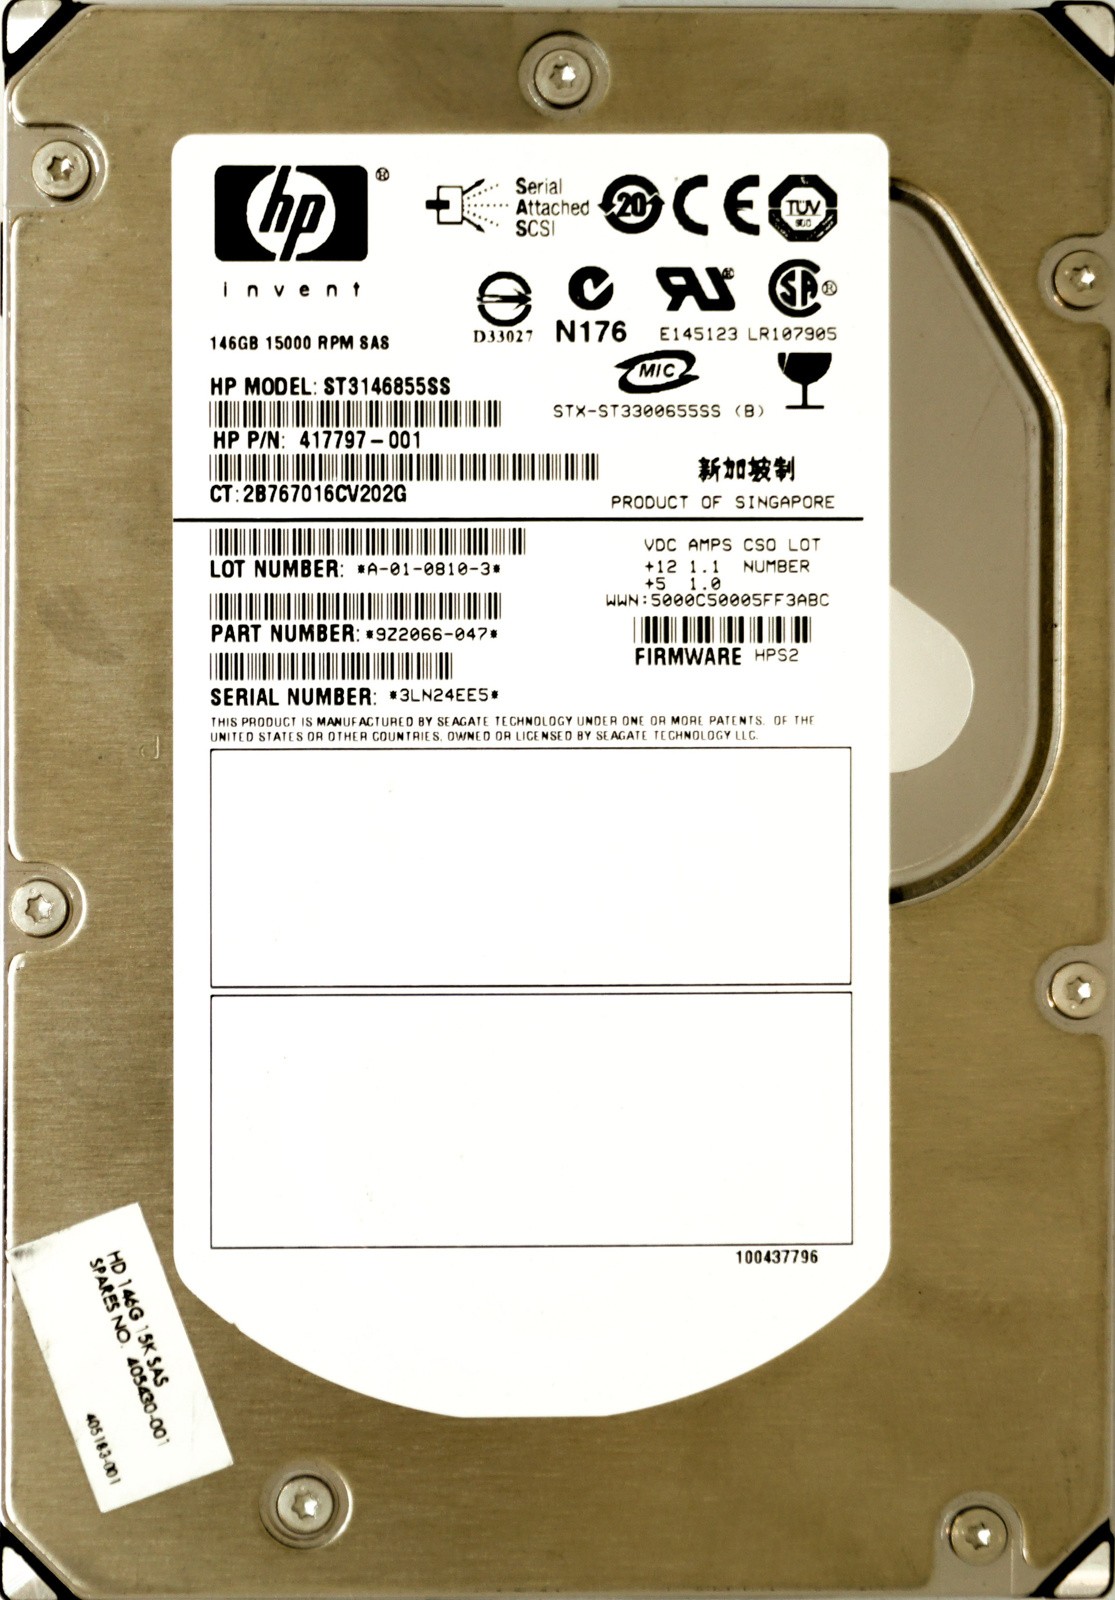 HP (417797-001) 146GB SAS-1 (LFF) 3Gb/s 15K HDD